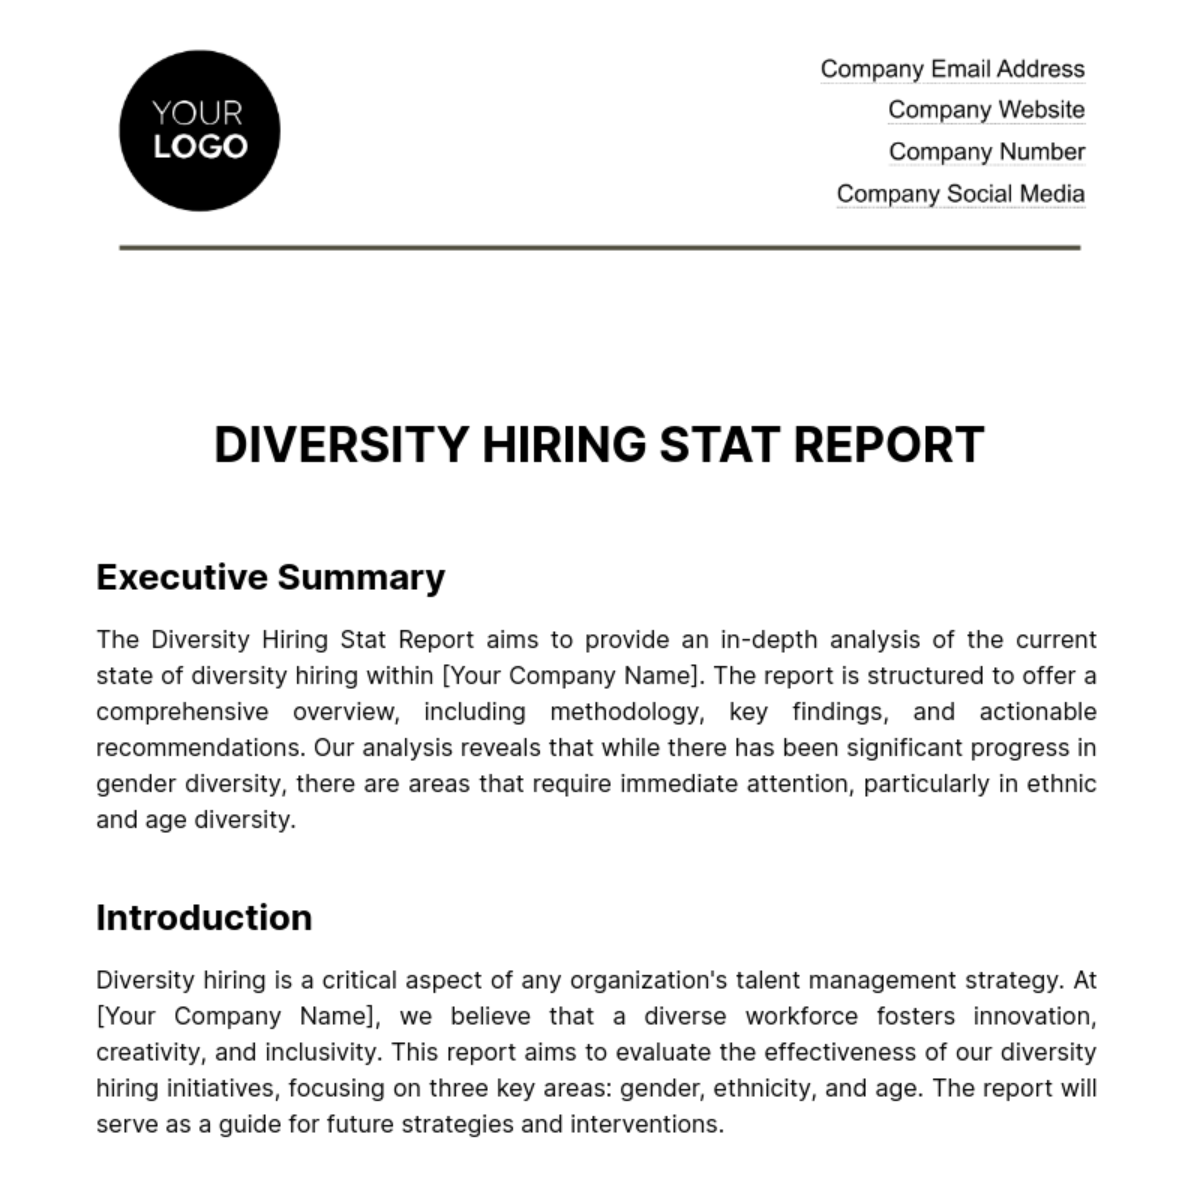 Free Diversity Hiring Stat Report HR Template